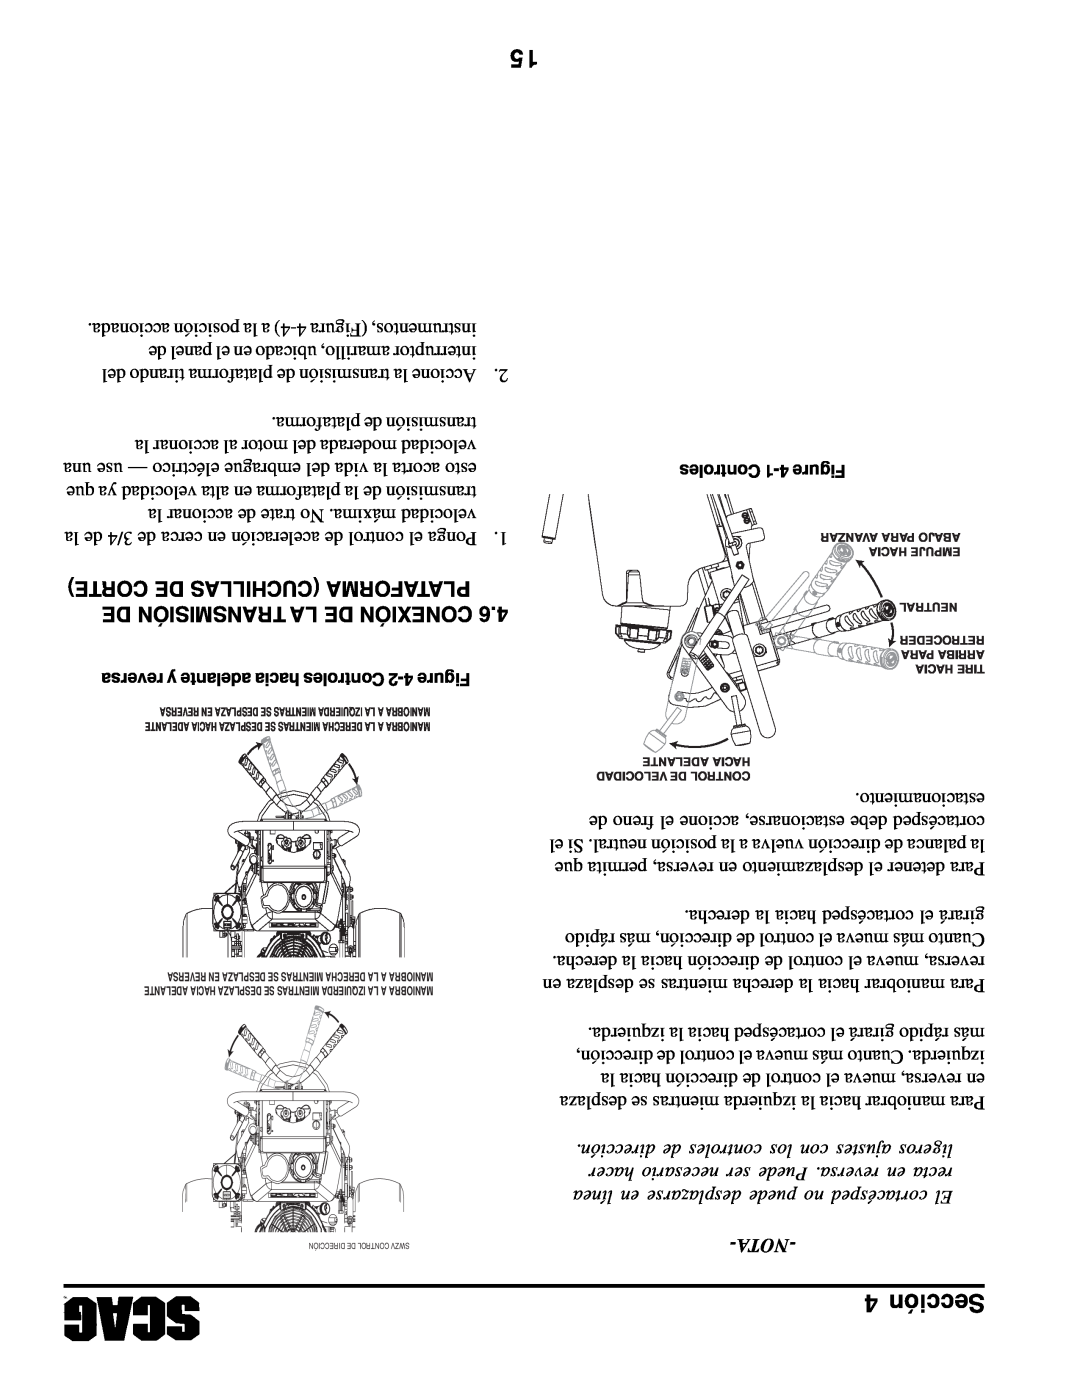 Scag Power Equipment SWZV manual Sección, Corte De Cuchillas Plataforma De Transmisión La De Conexión, Nota 